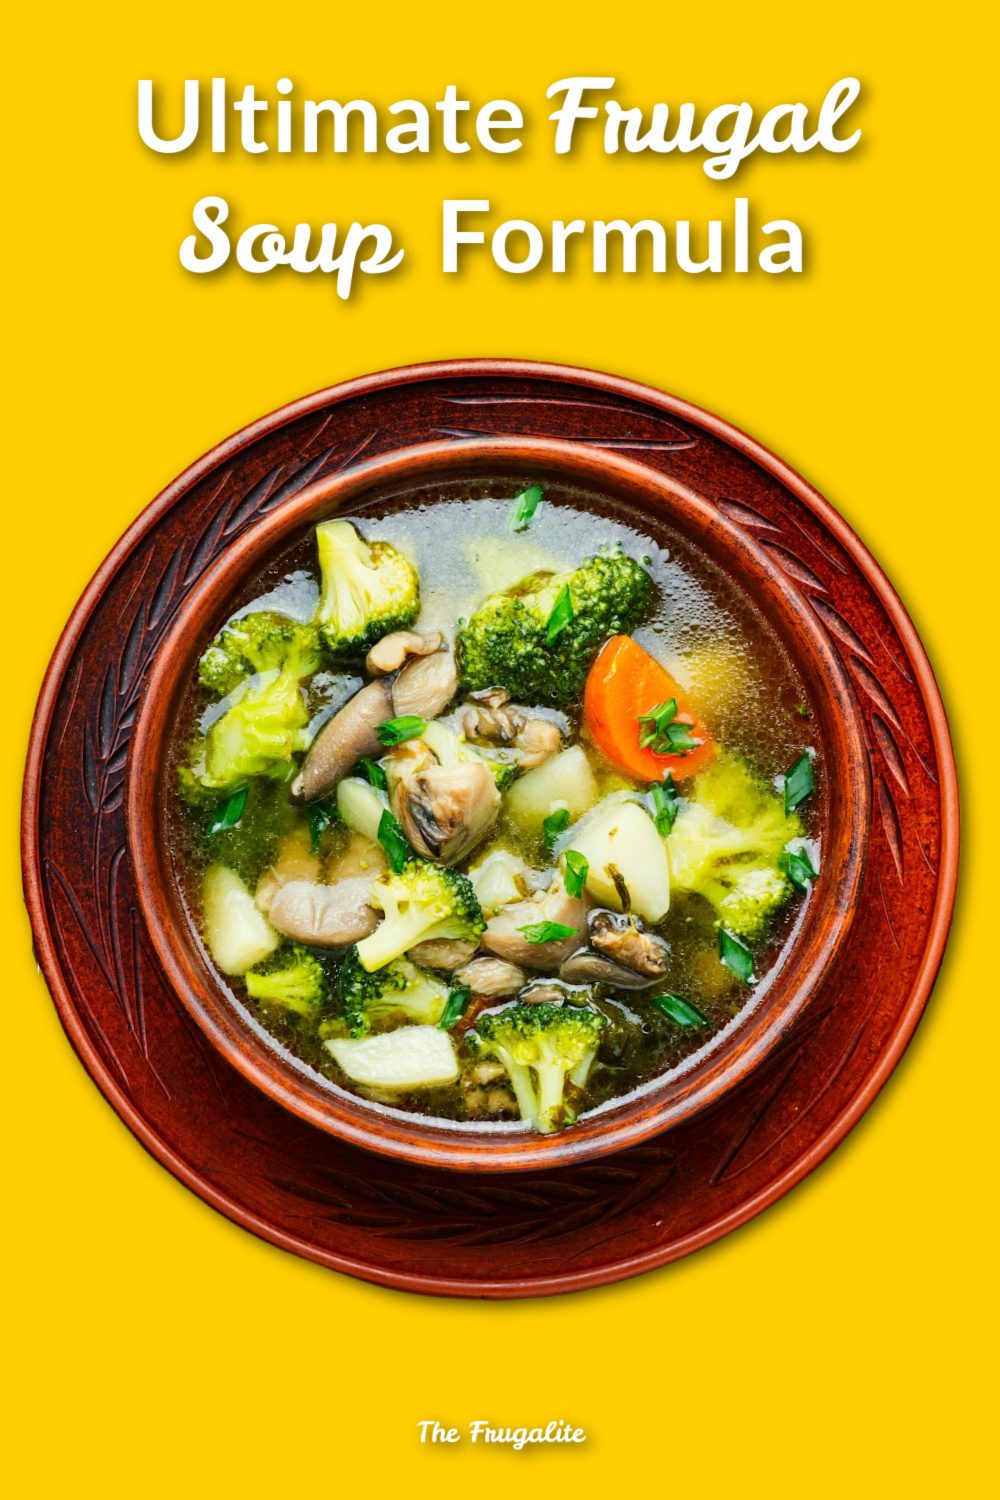 The Ultimate Frugal Soup Formula